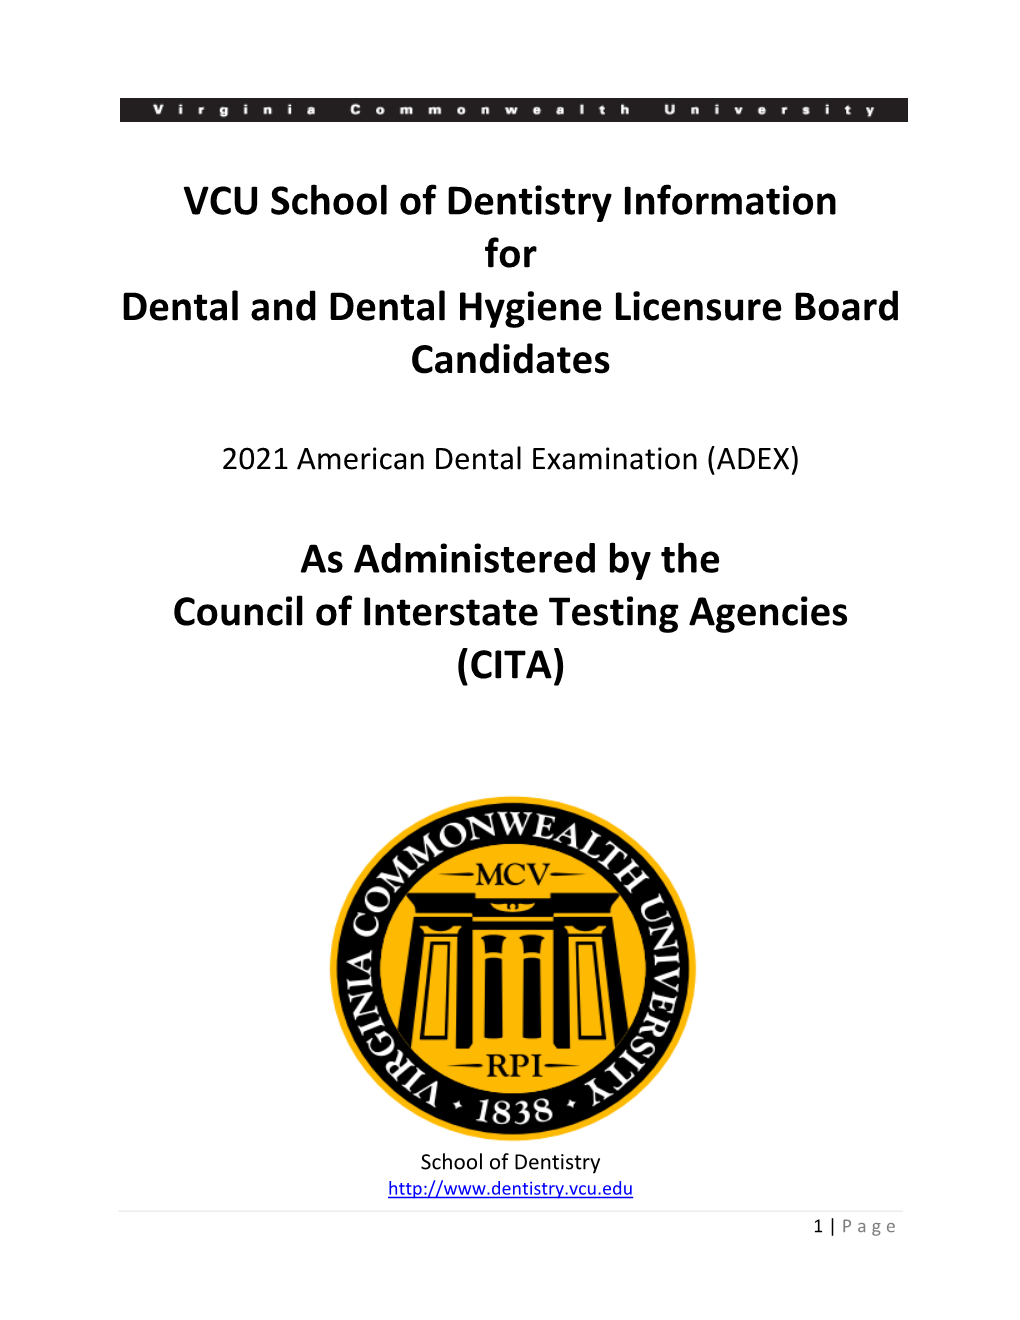 VCU School of Dentistry Information for Dental and Dental Hygiene Licensure Board Candidates